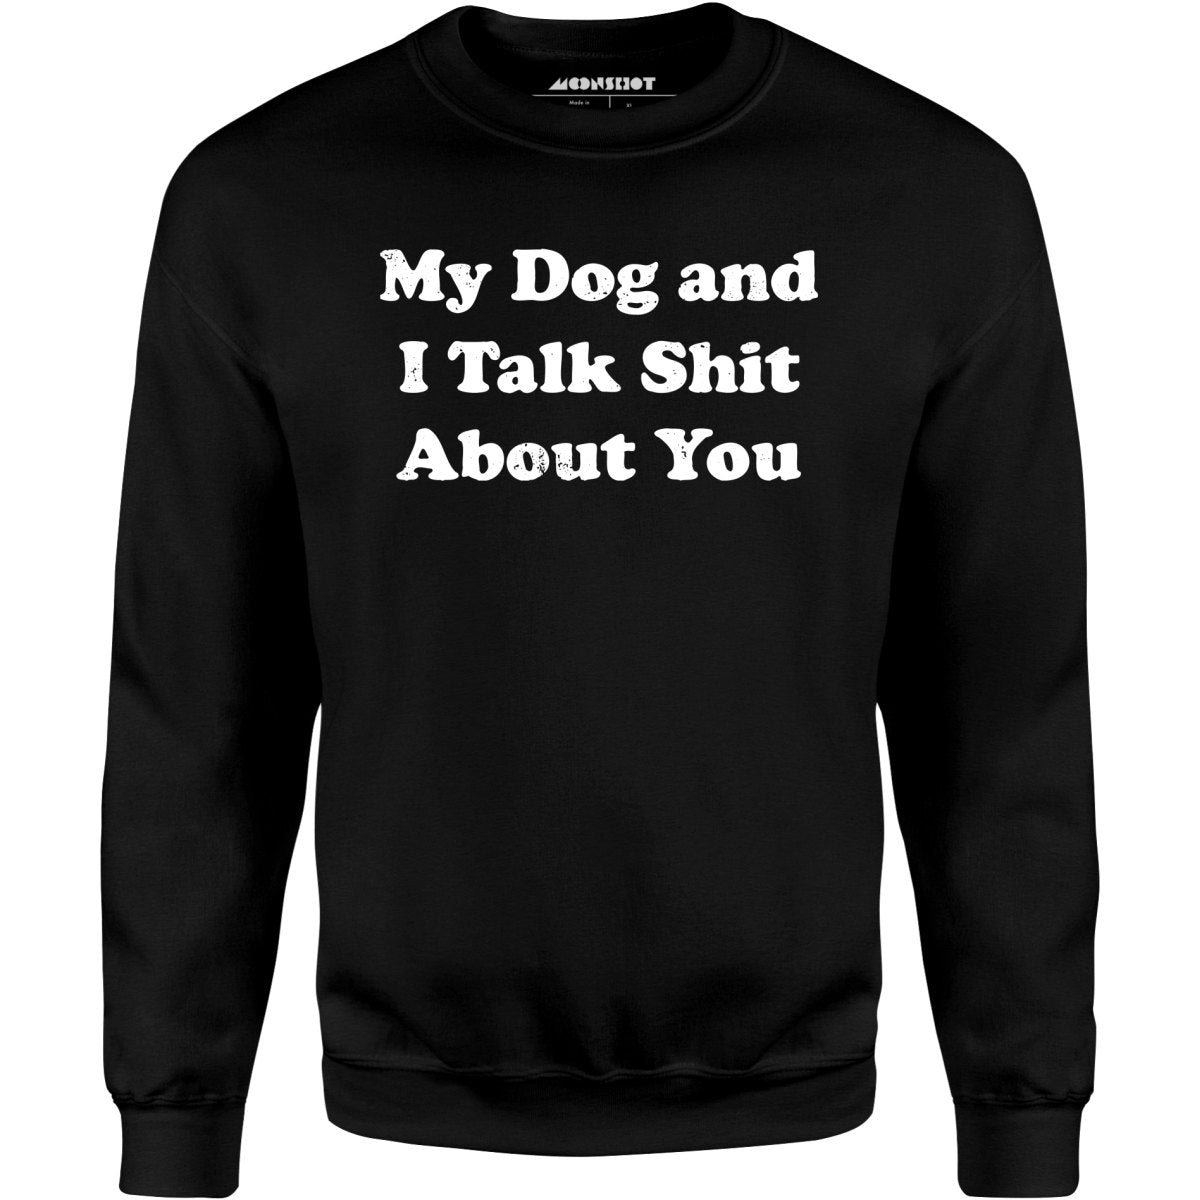 My Dog and I Talk Shit About You - Unisex Sweatshirt